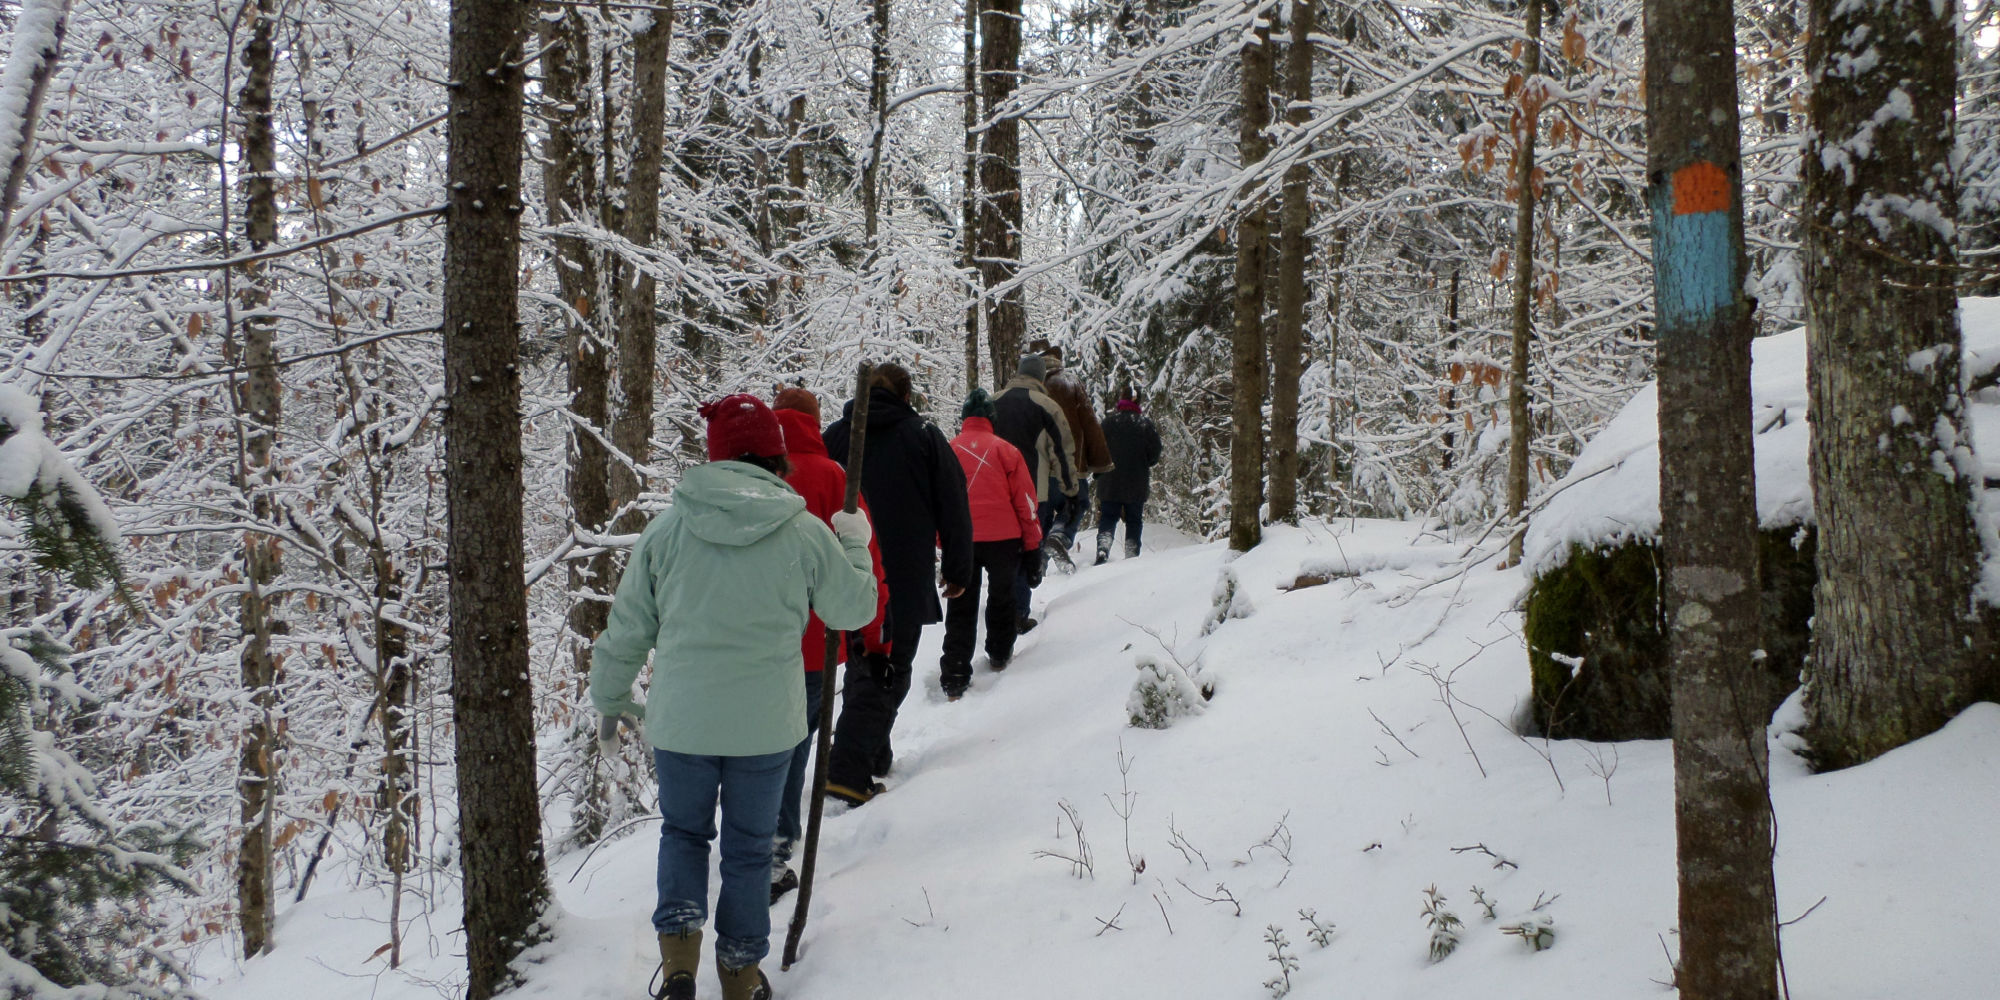 Hikers enjoy the winter terrain.